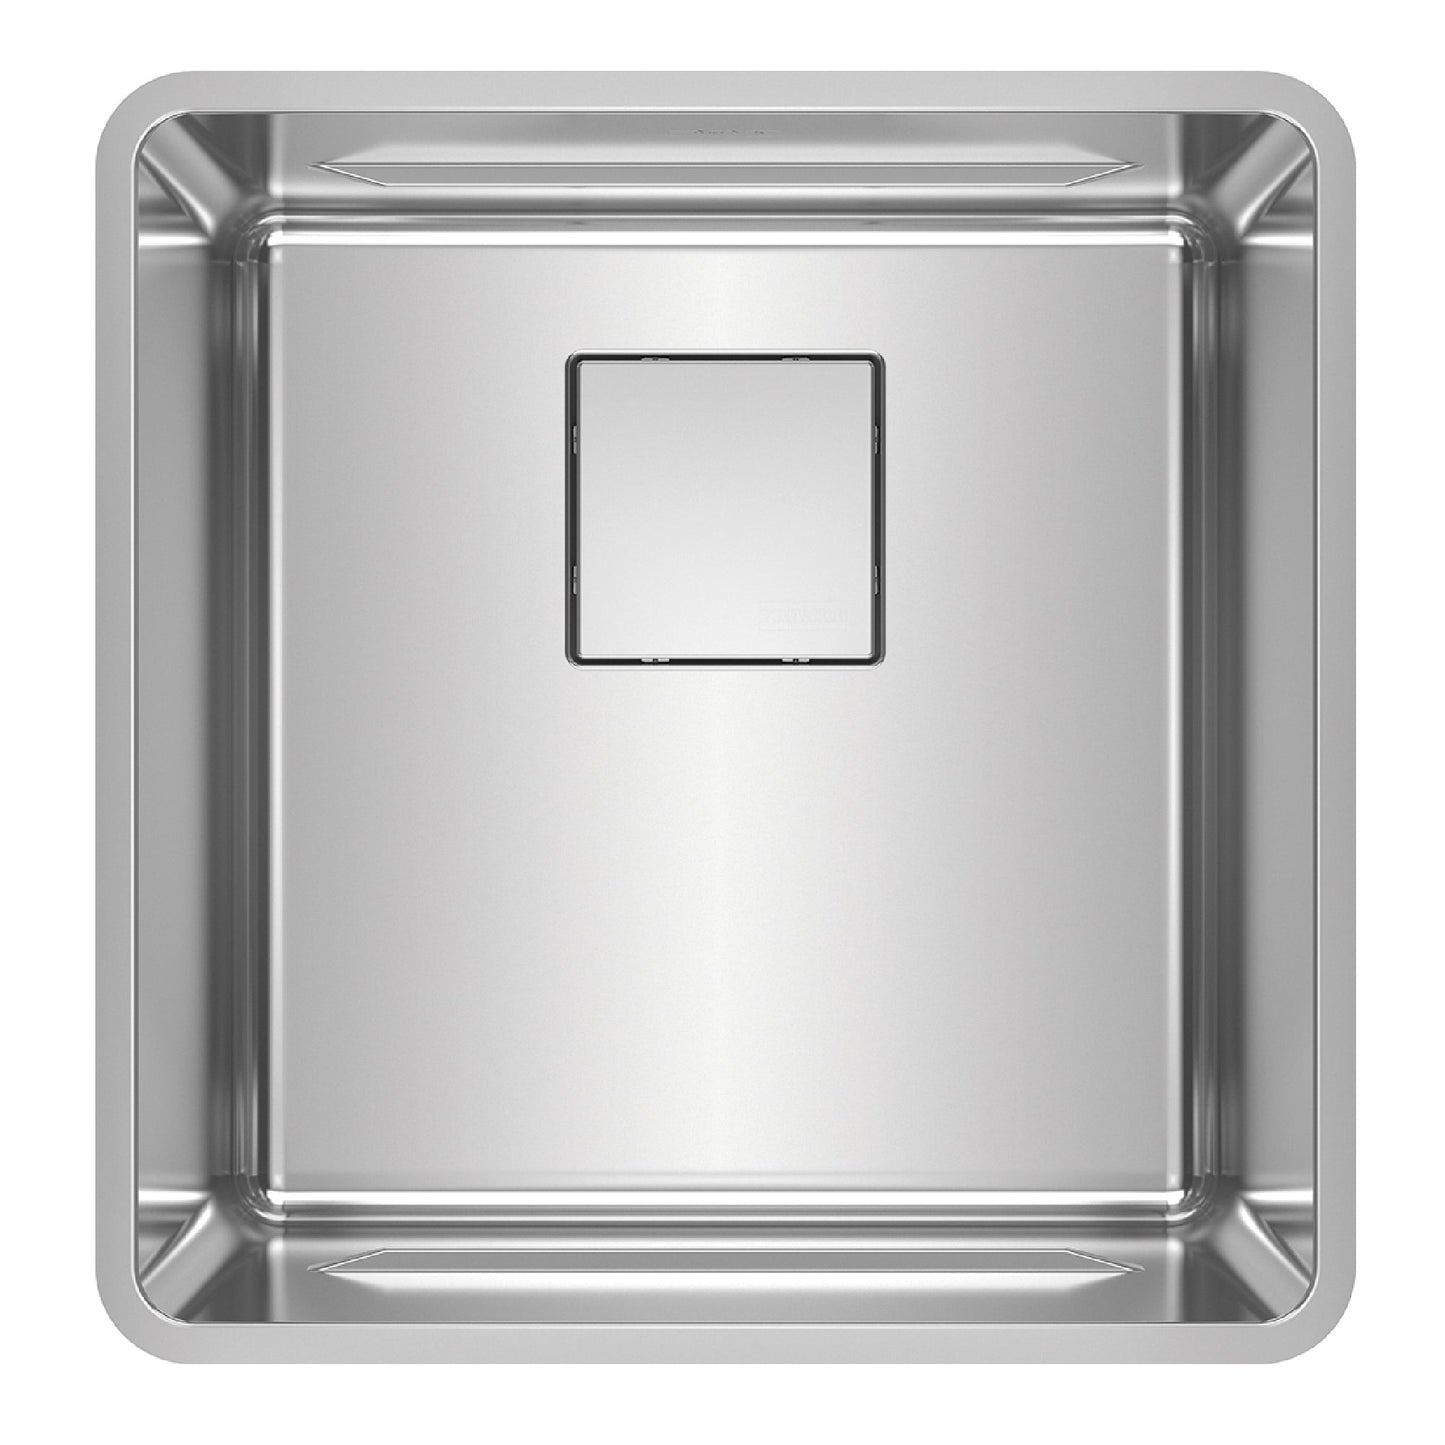 Franke Pescara 18-in. x 18-in. 18 Gauge Stainless Steel Undermount Single Bowl Kitchen Sink - PTX110-17